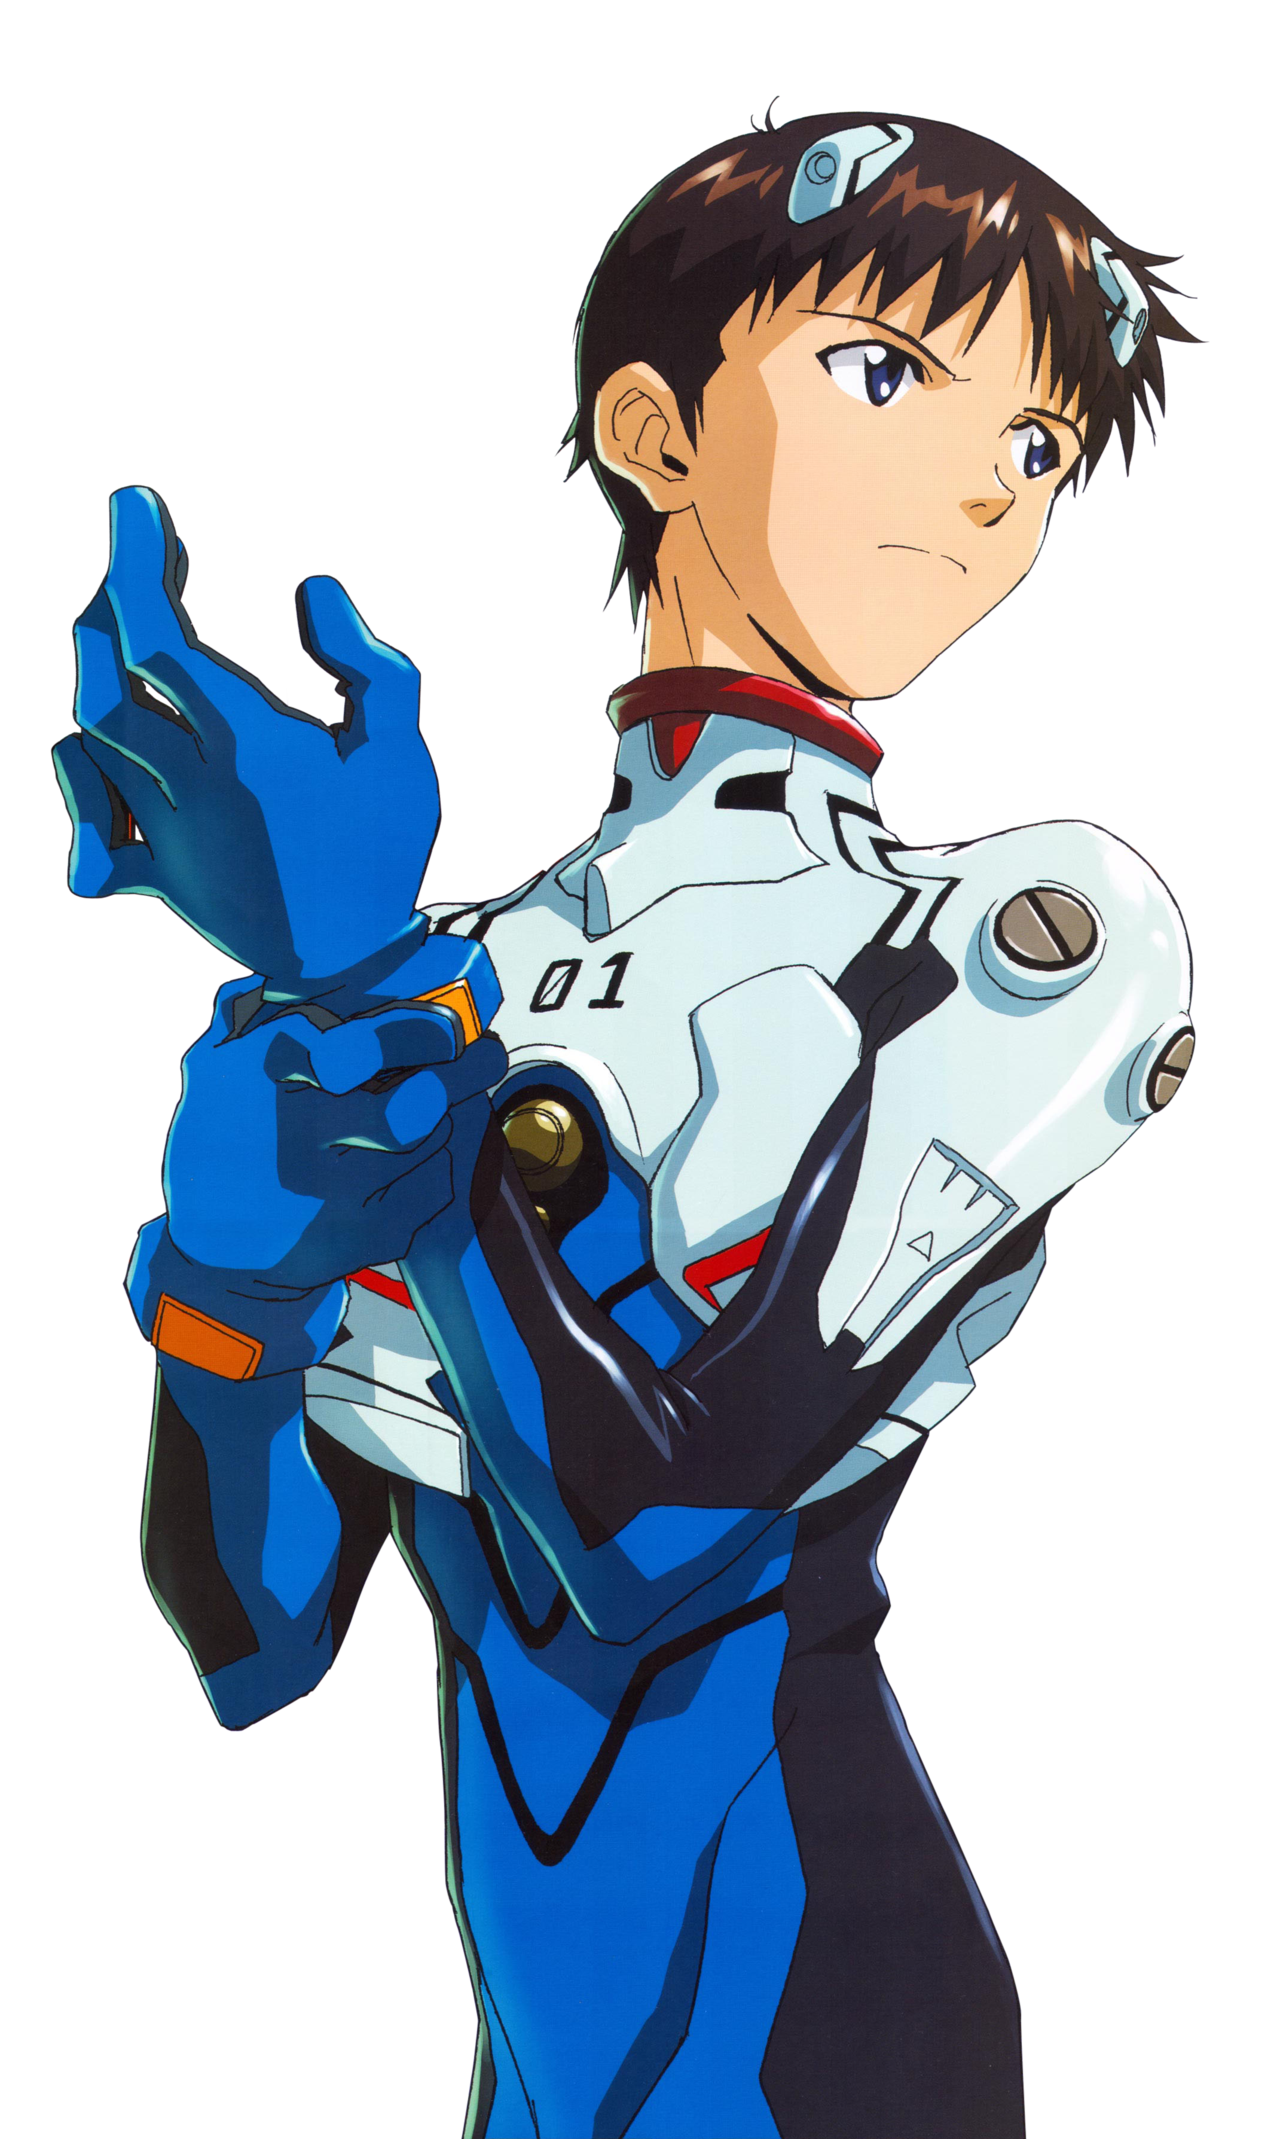 Shinji Is the Greatest Anime Character? Or the Worst? - An In-depth Look at  Shinji Ikari - YouTube